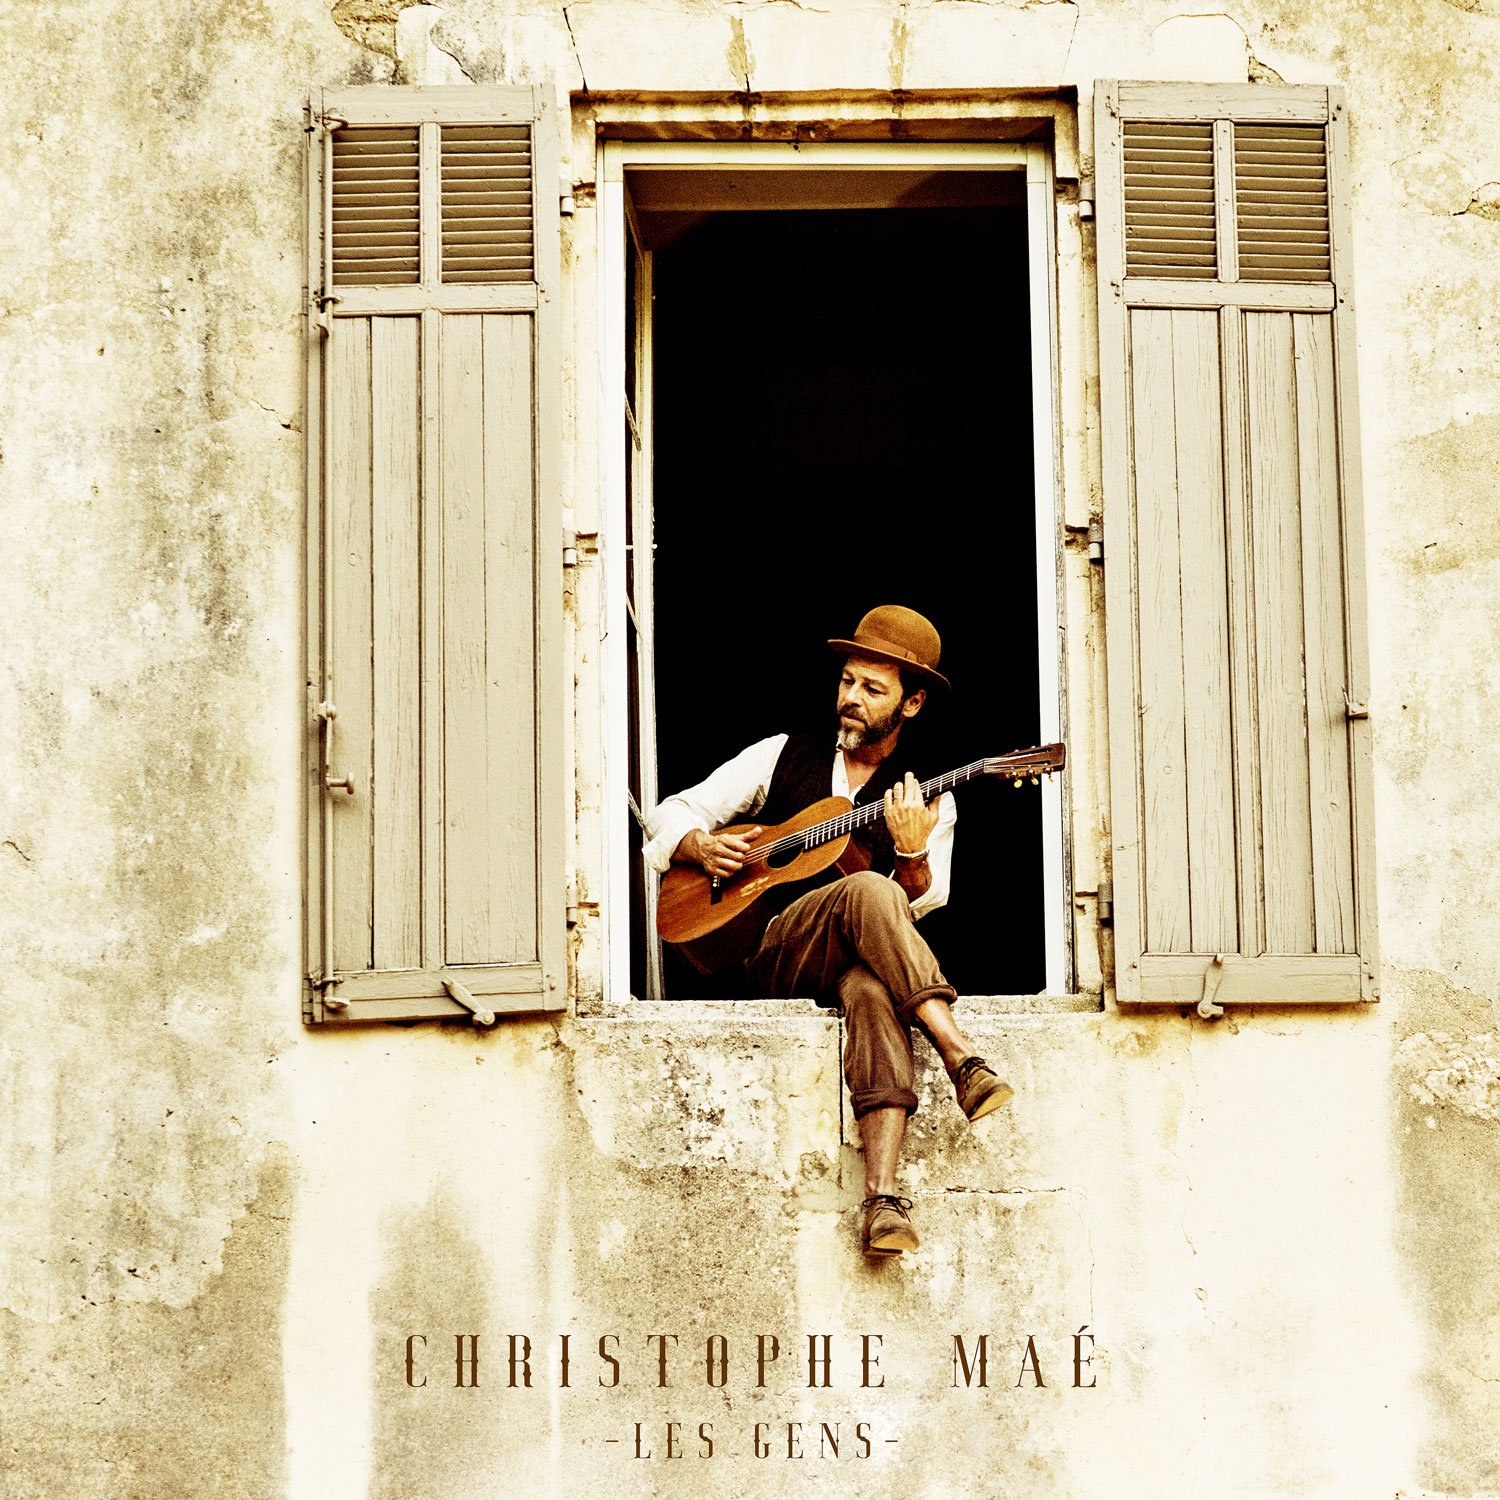 Cristophe mae песни. Christophe Mae. Christophe Maé обложка альбома. Кристоф мае певец. Кристоф (певец) альбомы.